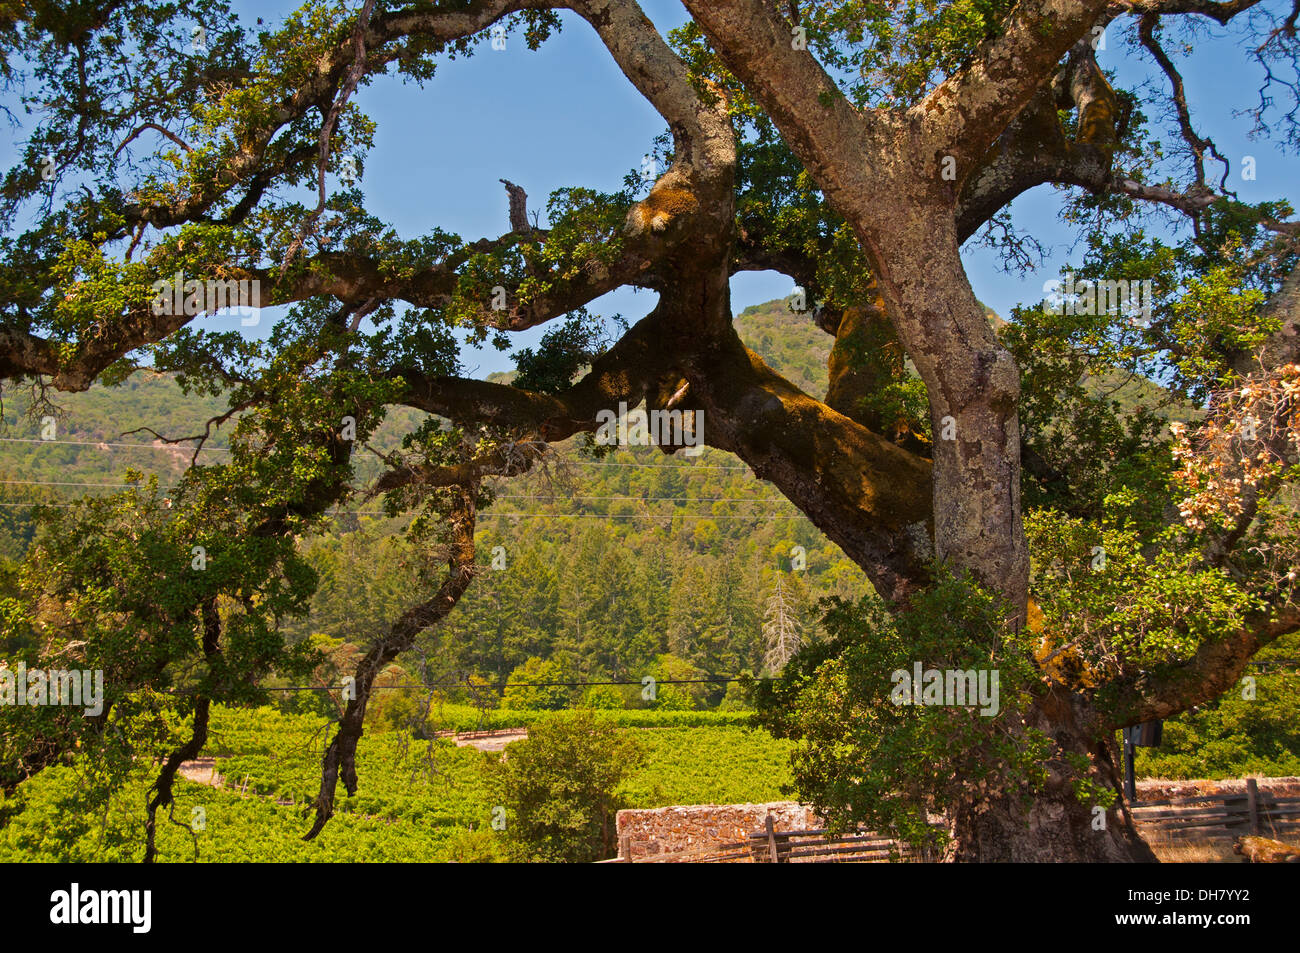 California Live Oak tree adjacent to the London cottage, Jack London State Historic Park, Glen Ellen, California Stock Photo